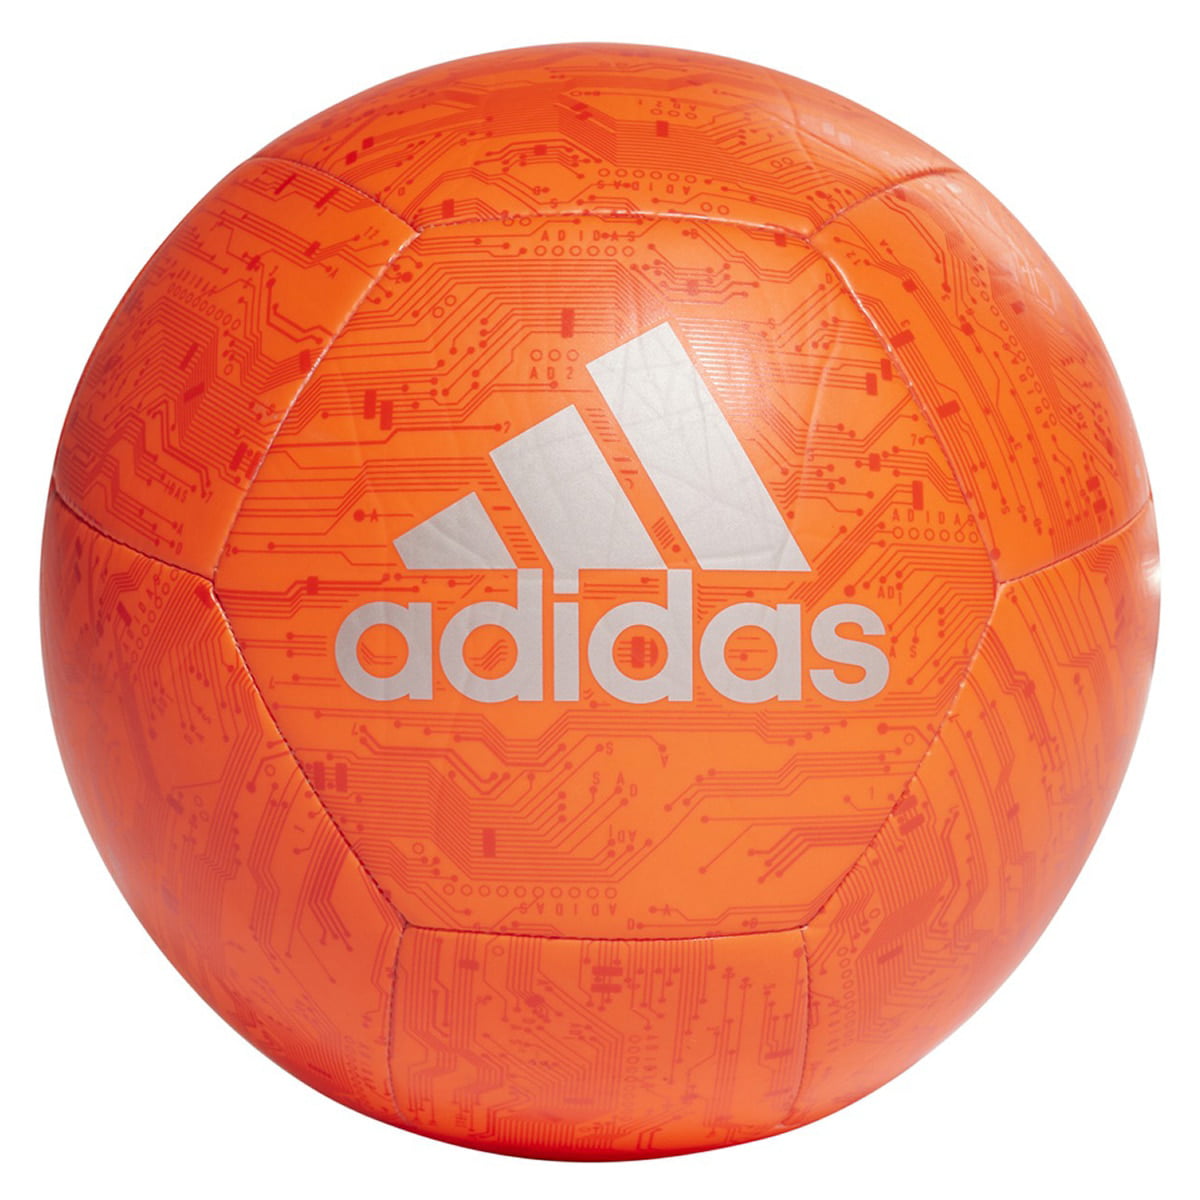 Adidas Capitano Soccer Ball, Size 3 